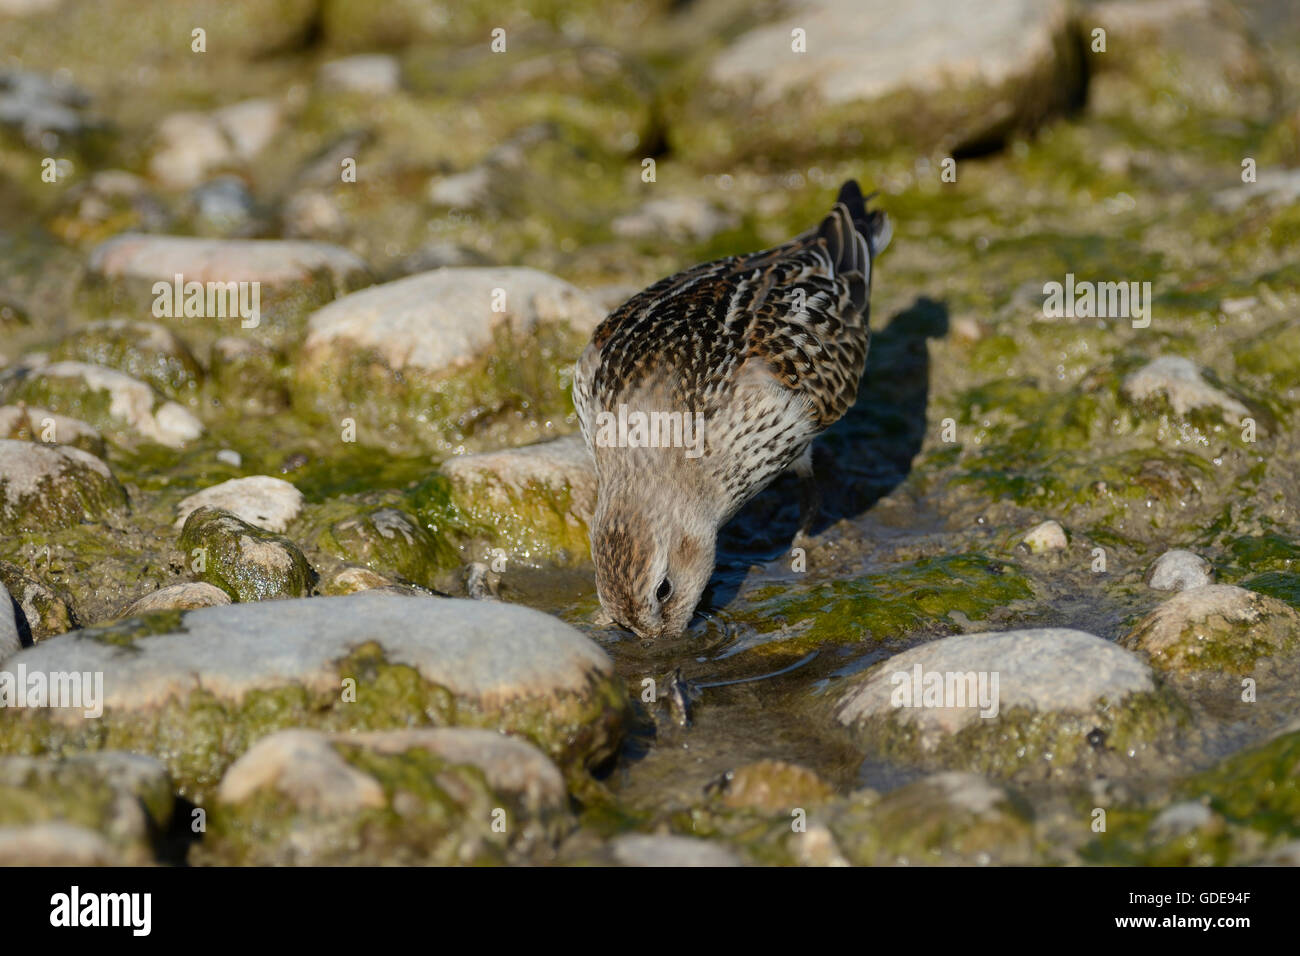 Dunlin,Calidris alpina,Scolopacidae,wader,bird,animal,Stampf,Jona,Canton of St. Gall,Switzerland Stock Photo